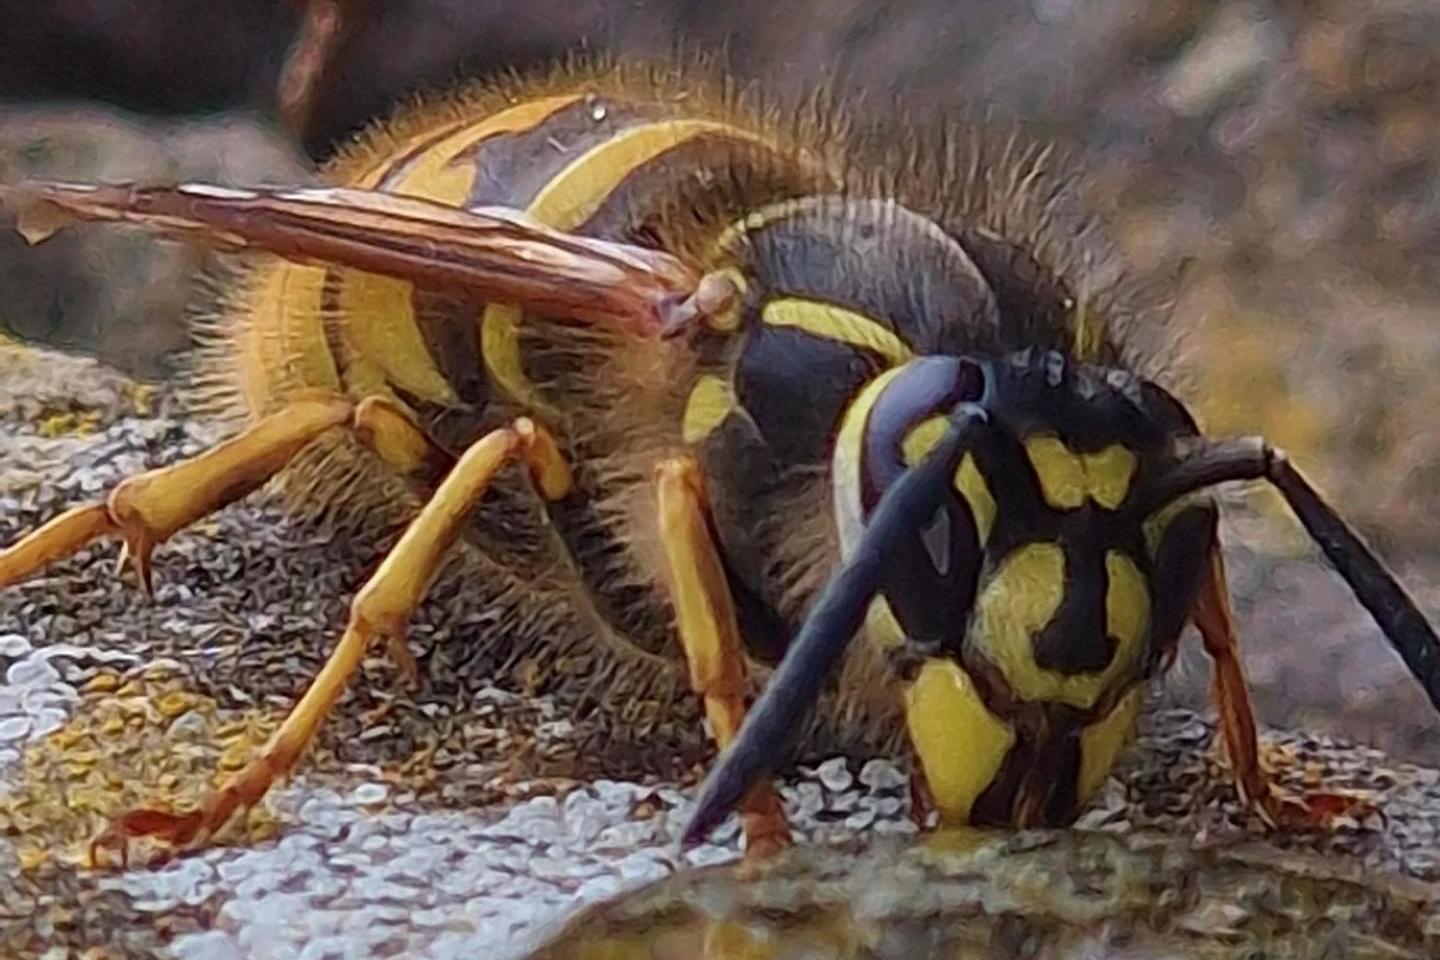 Queen wasp drinking